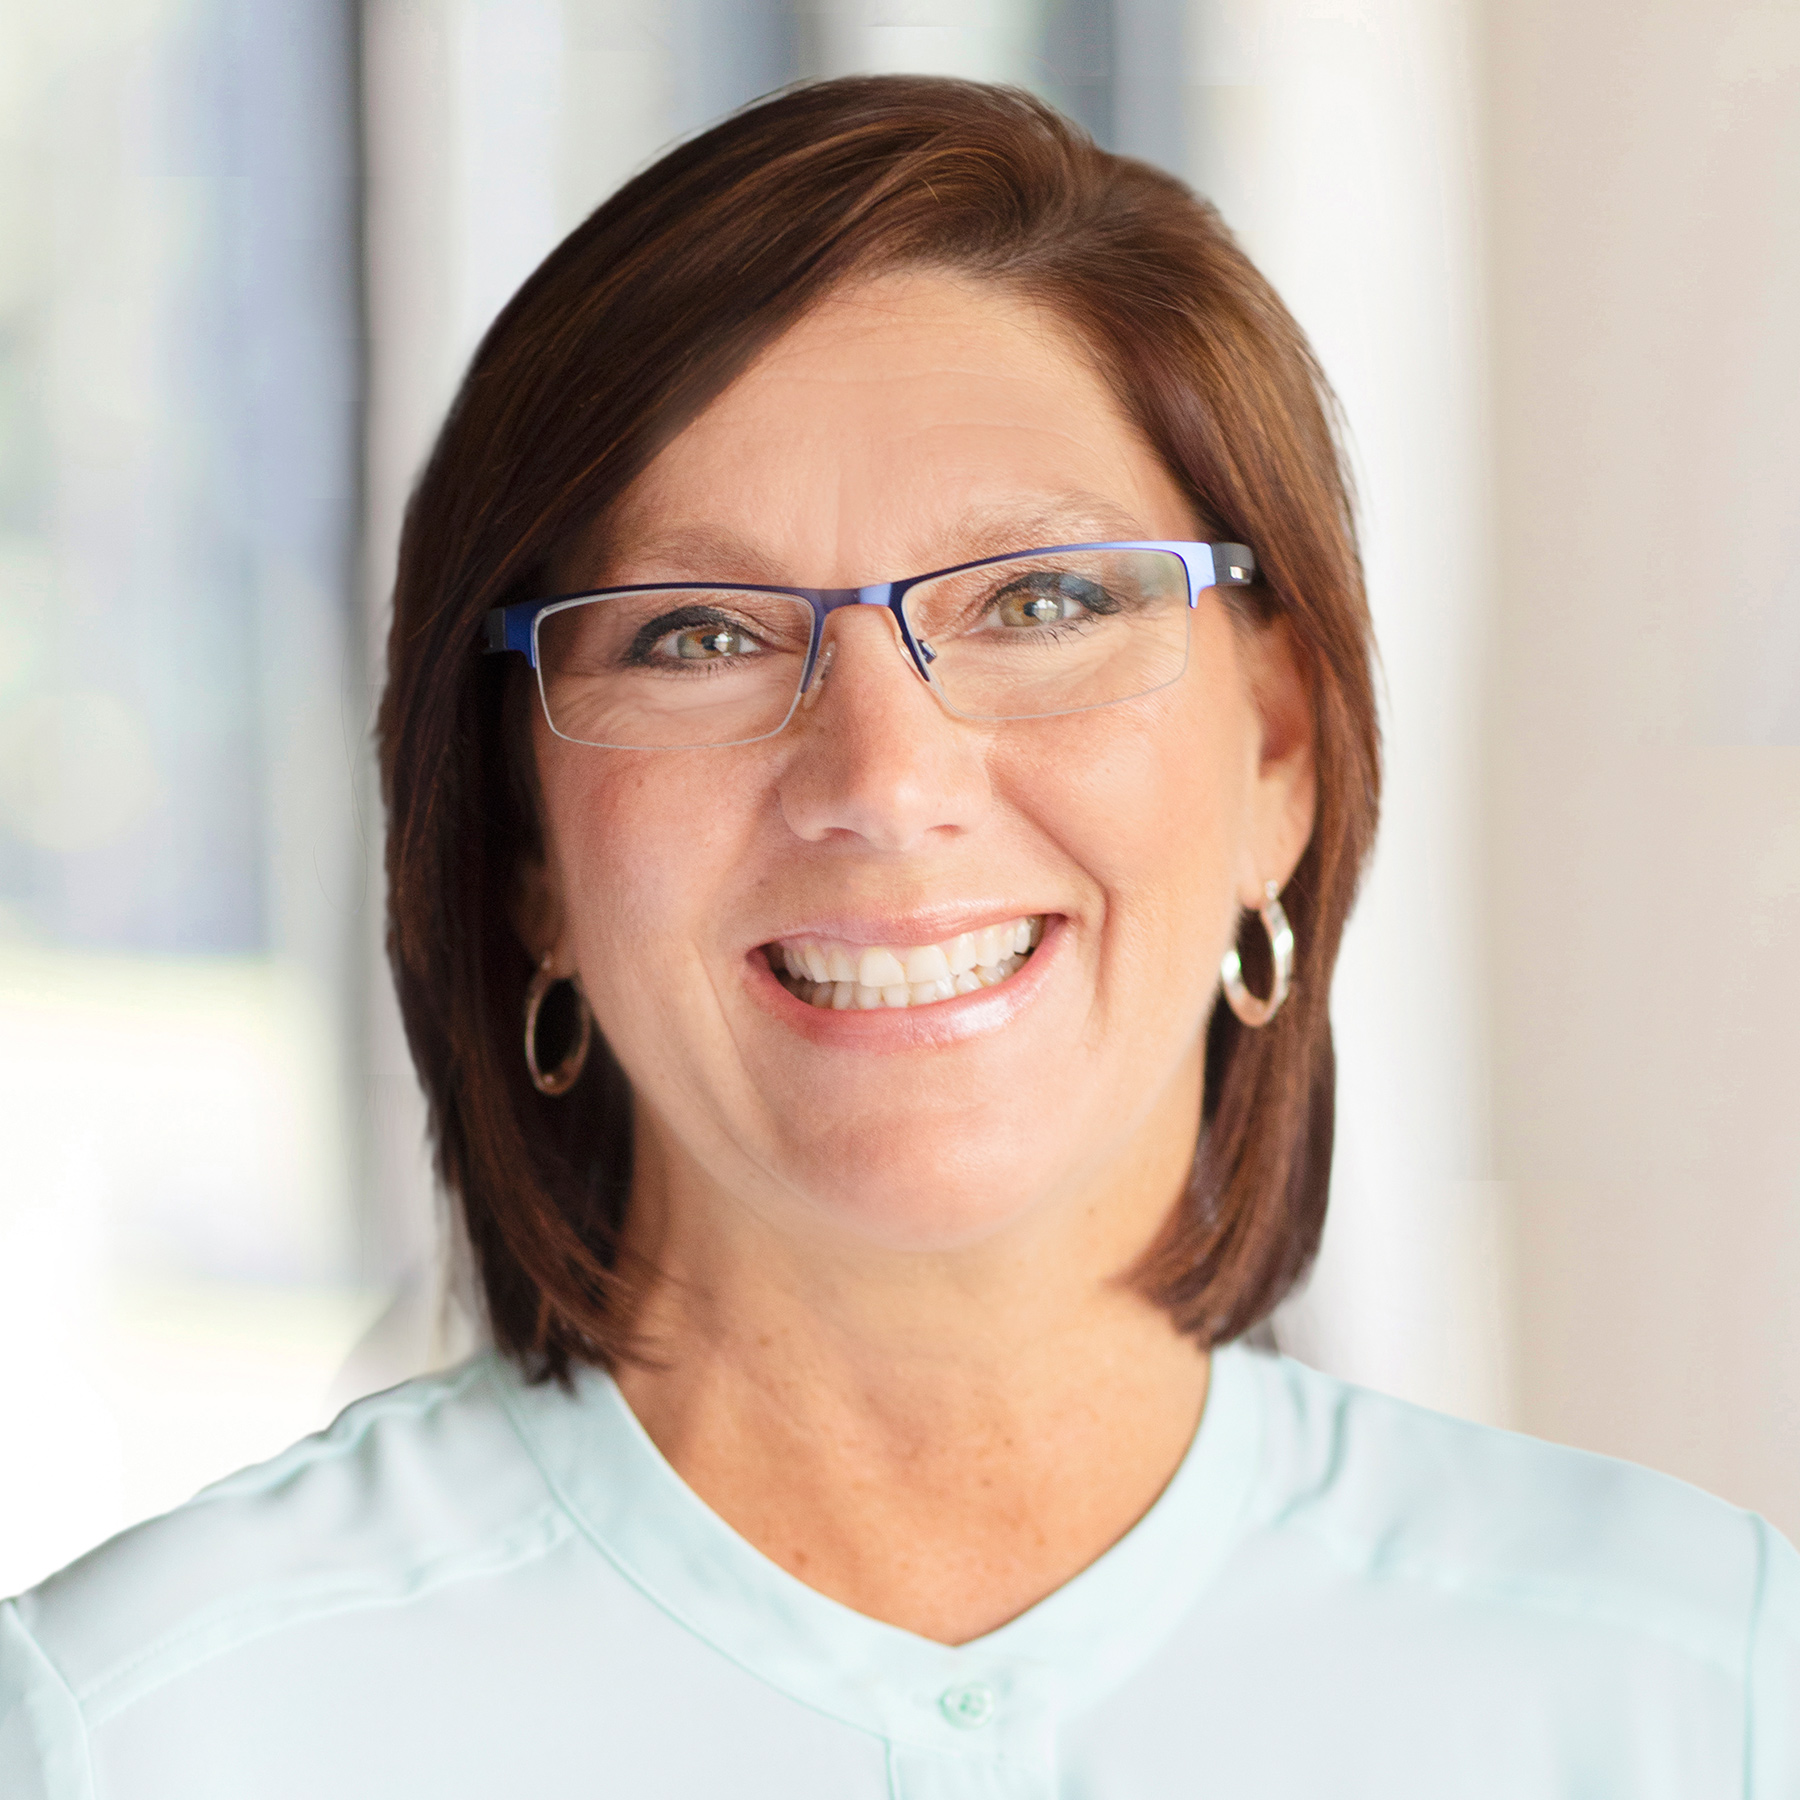 Cindy Grabowski, Sonex Health's VP of Clinical Affairs